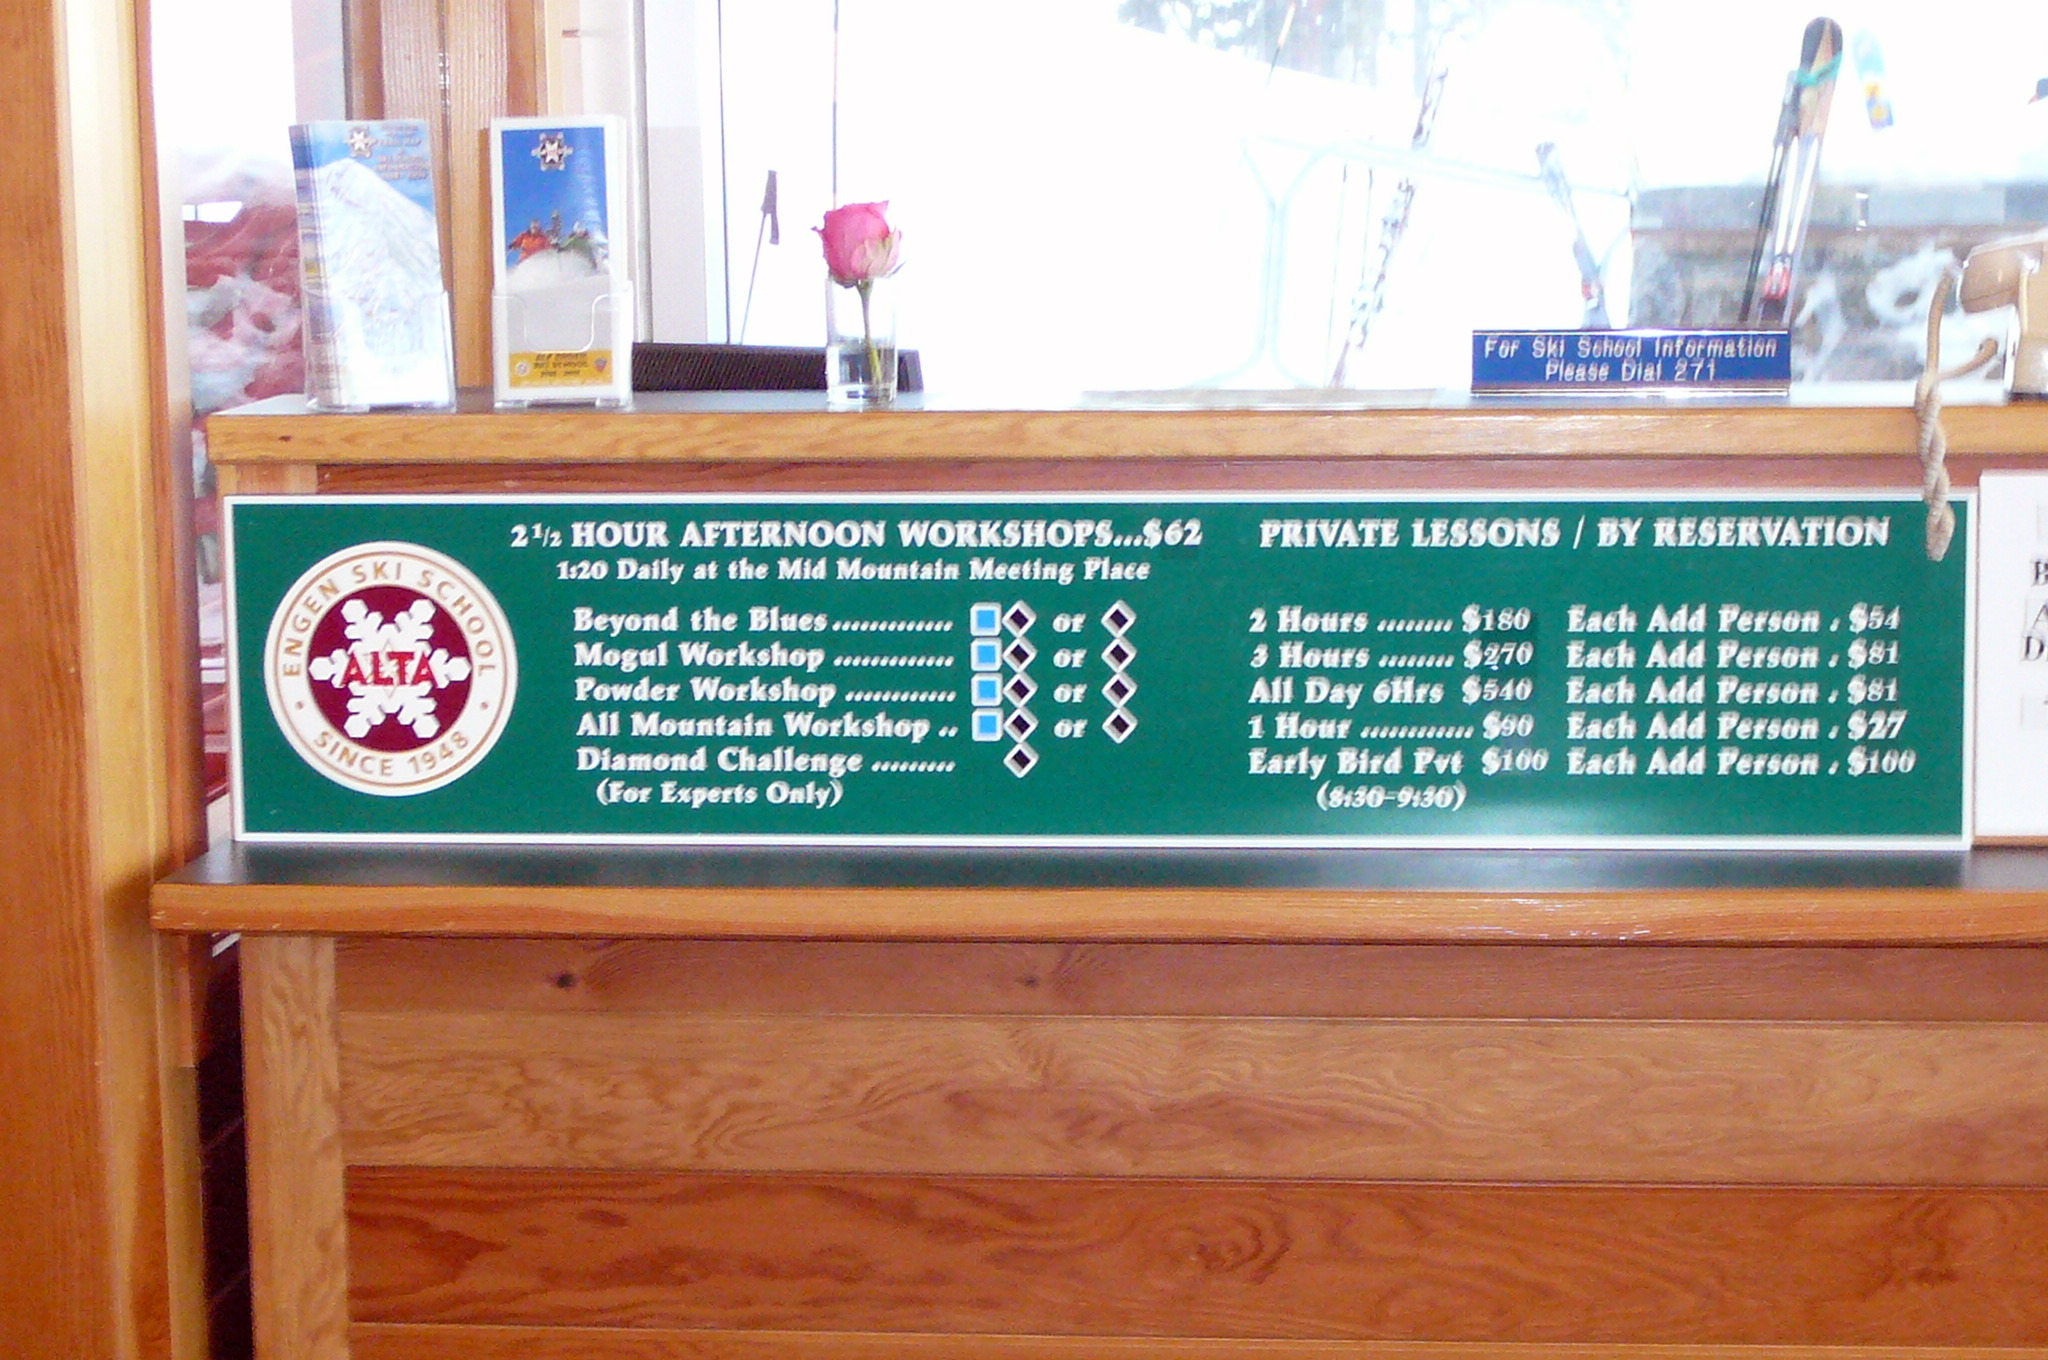 Alta Ski School Information Sign